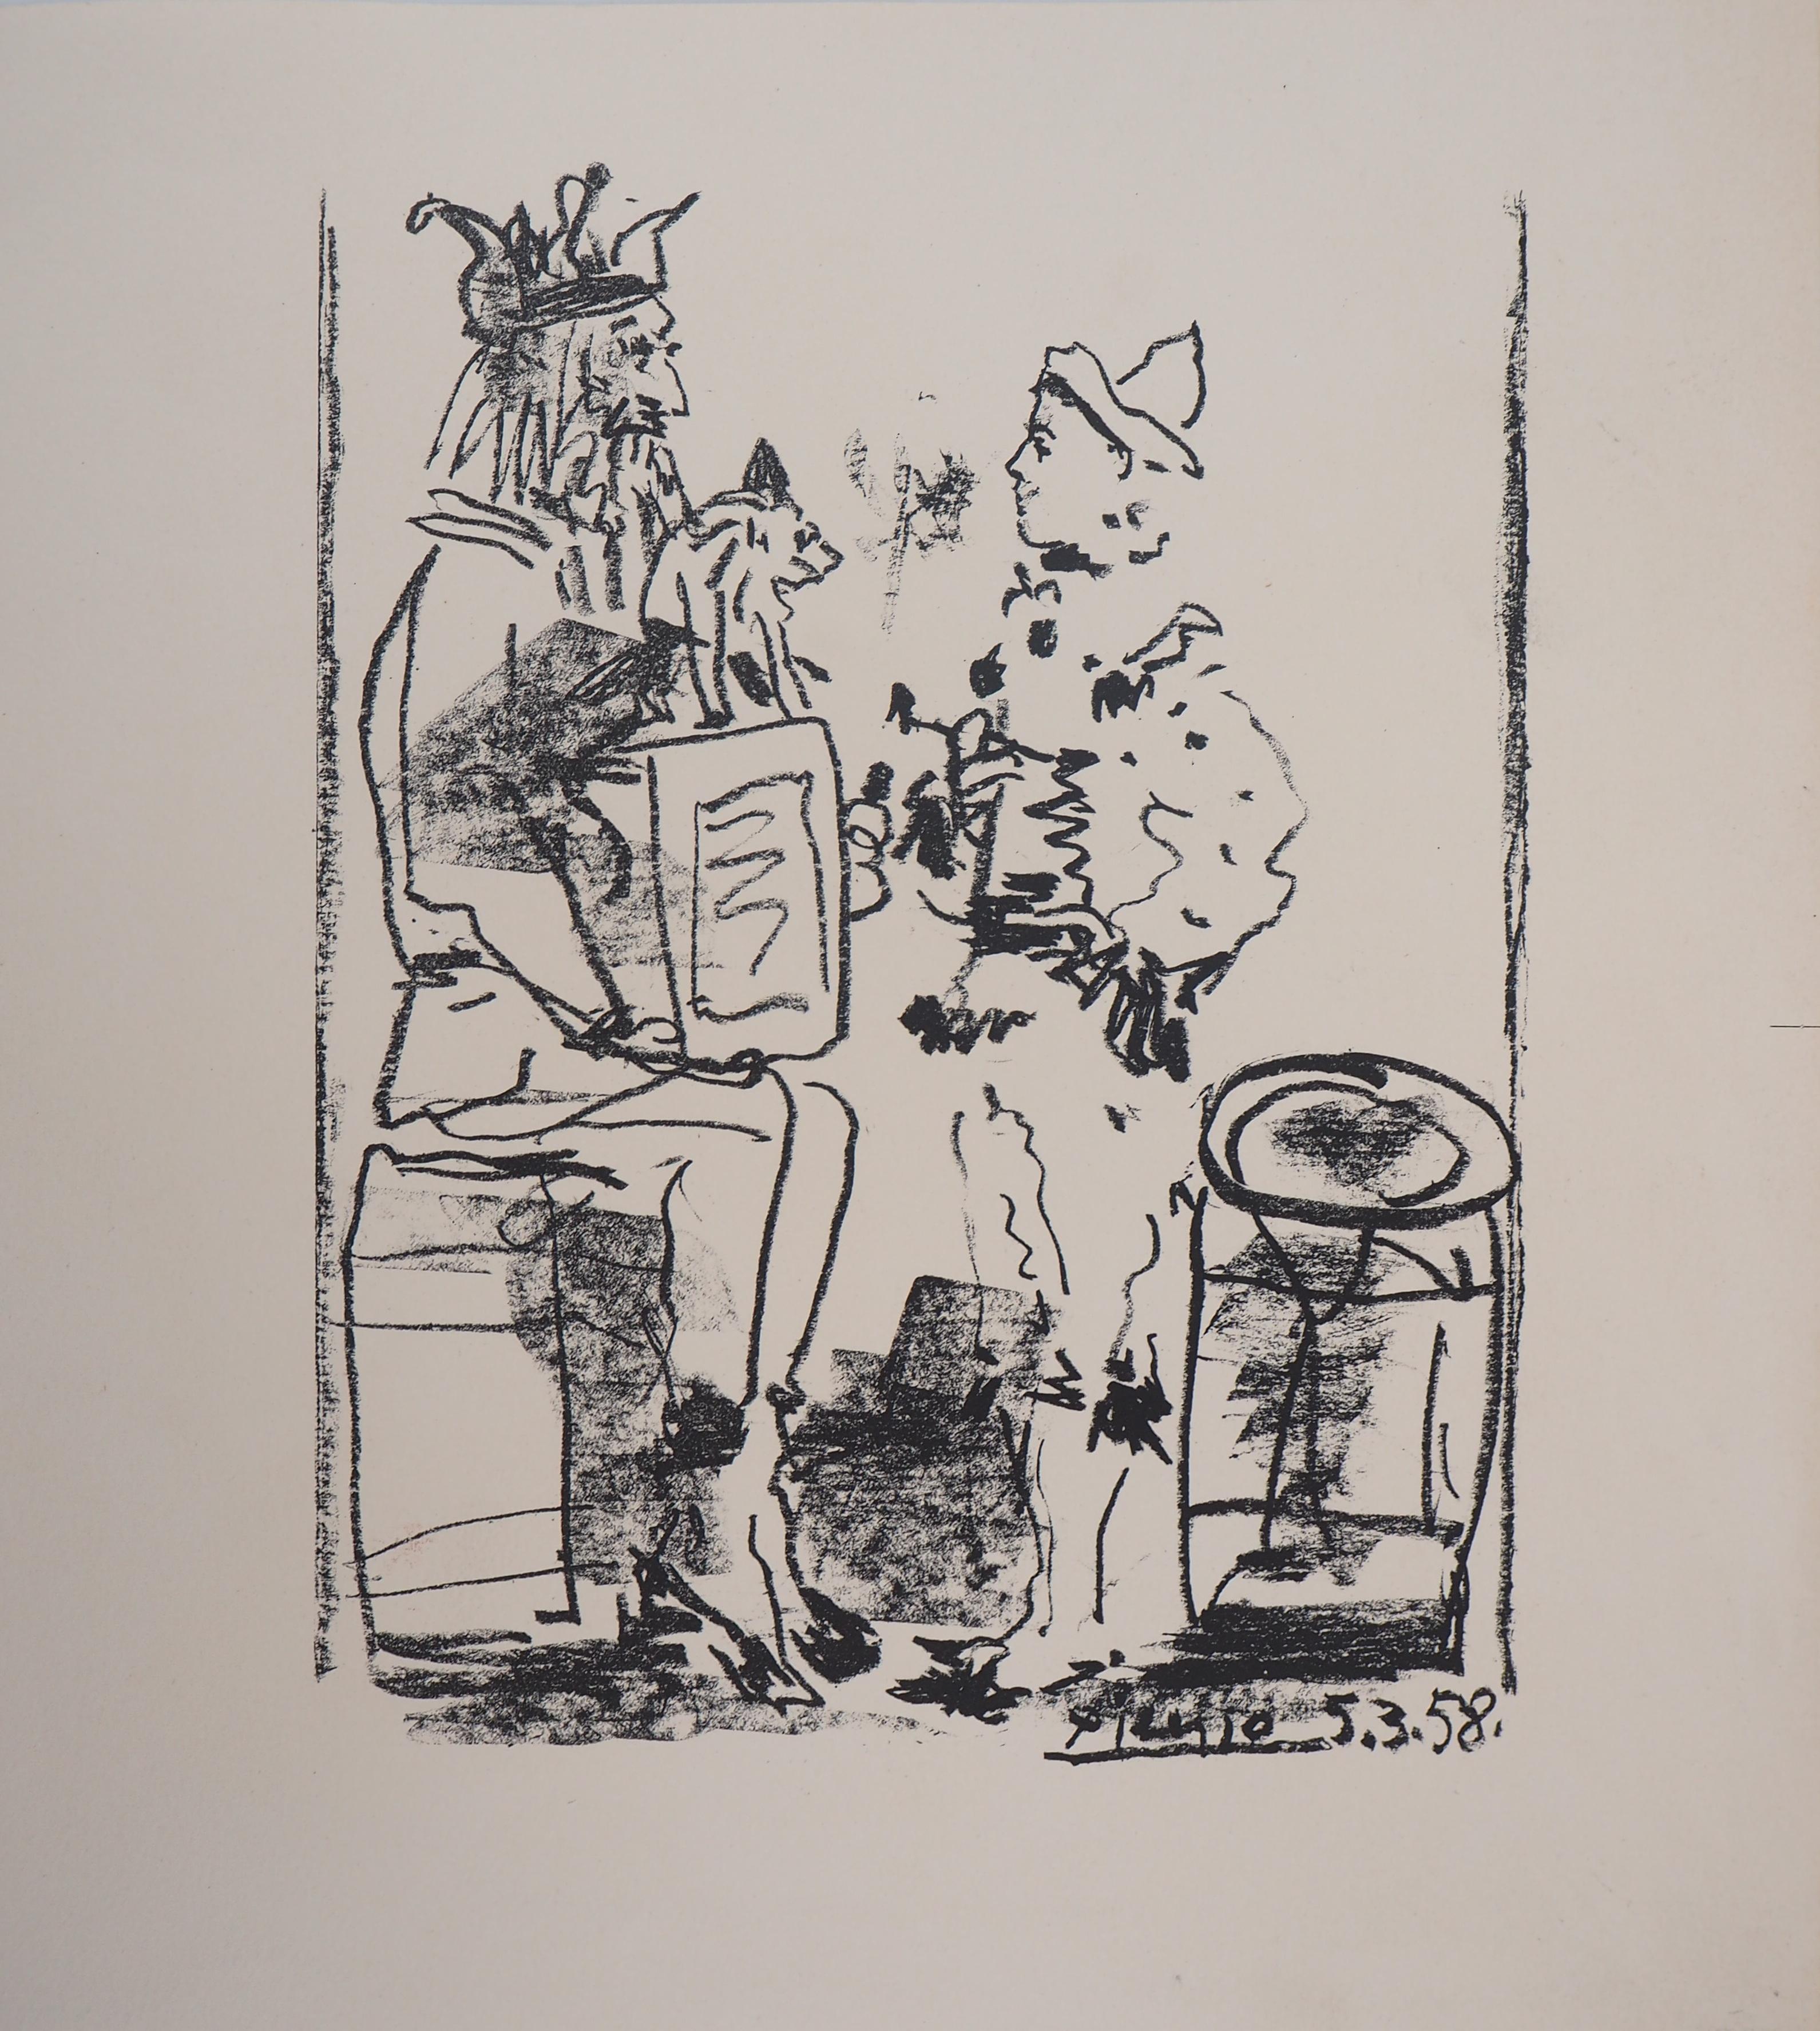 Pablo Picasso Figurative Print - The Tumblers - Original lithograph (Bloch #855 / Mourlot #285)